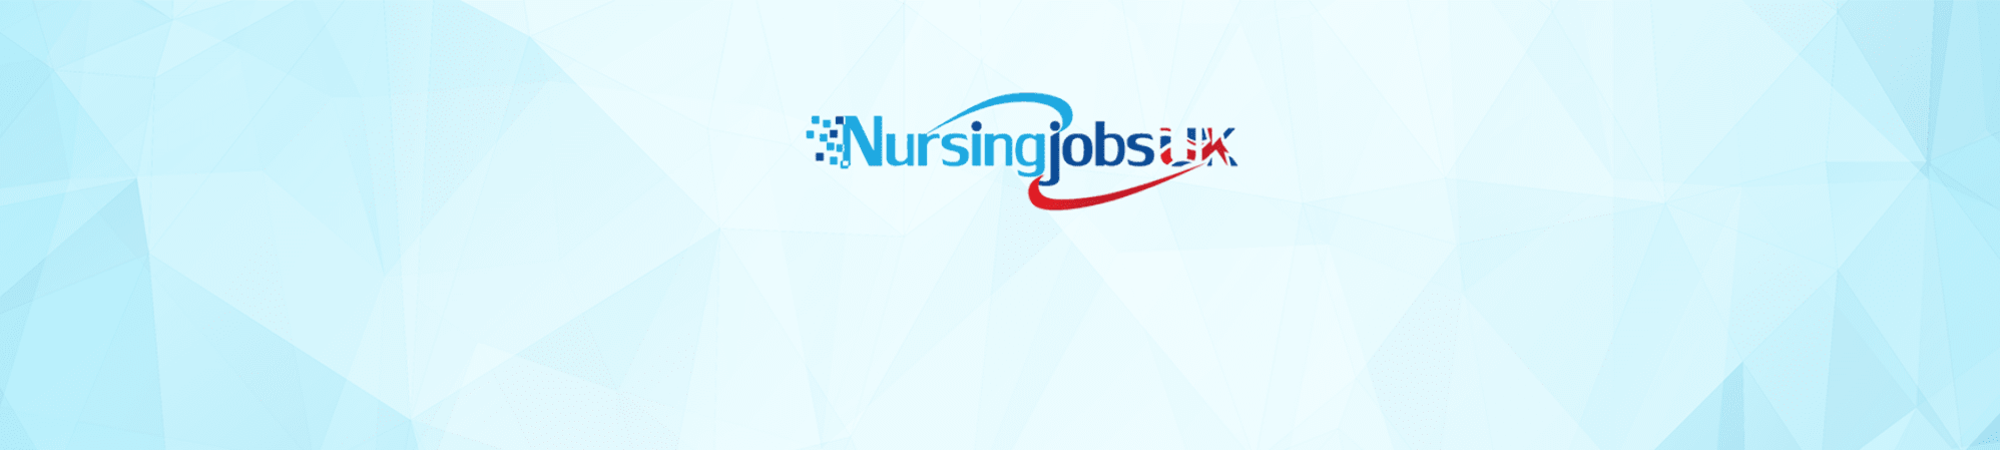 NursingjobsUK banner image